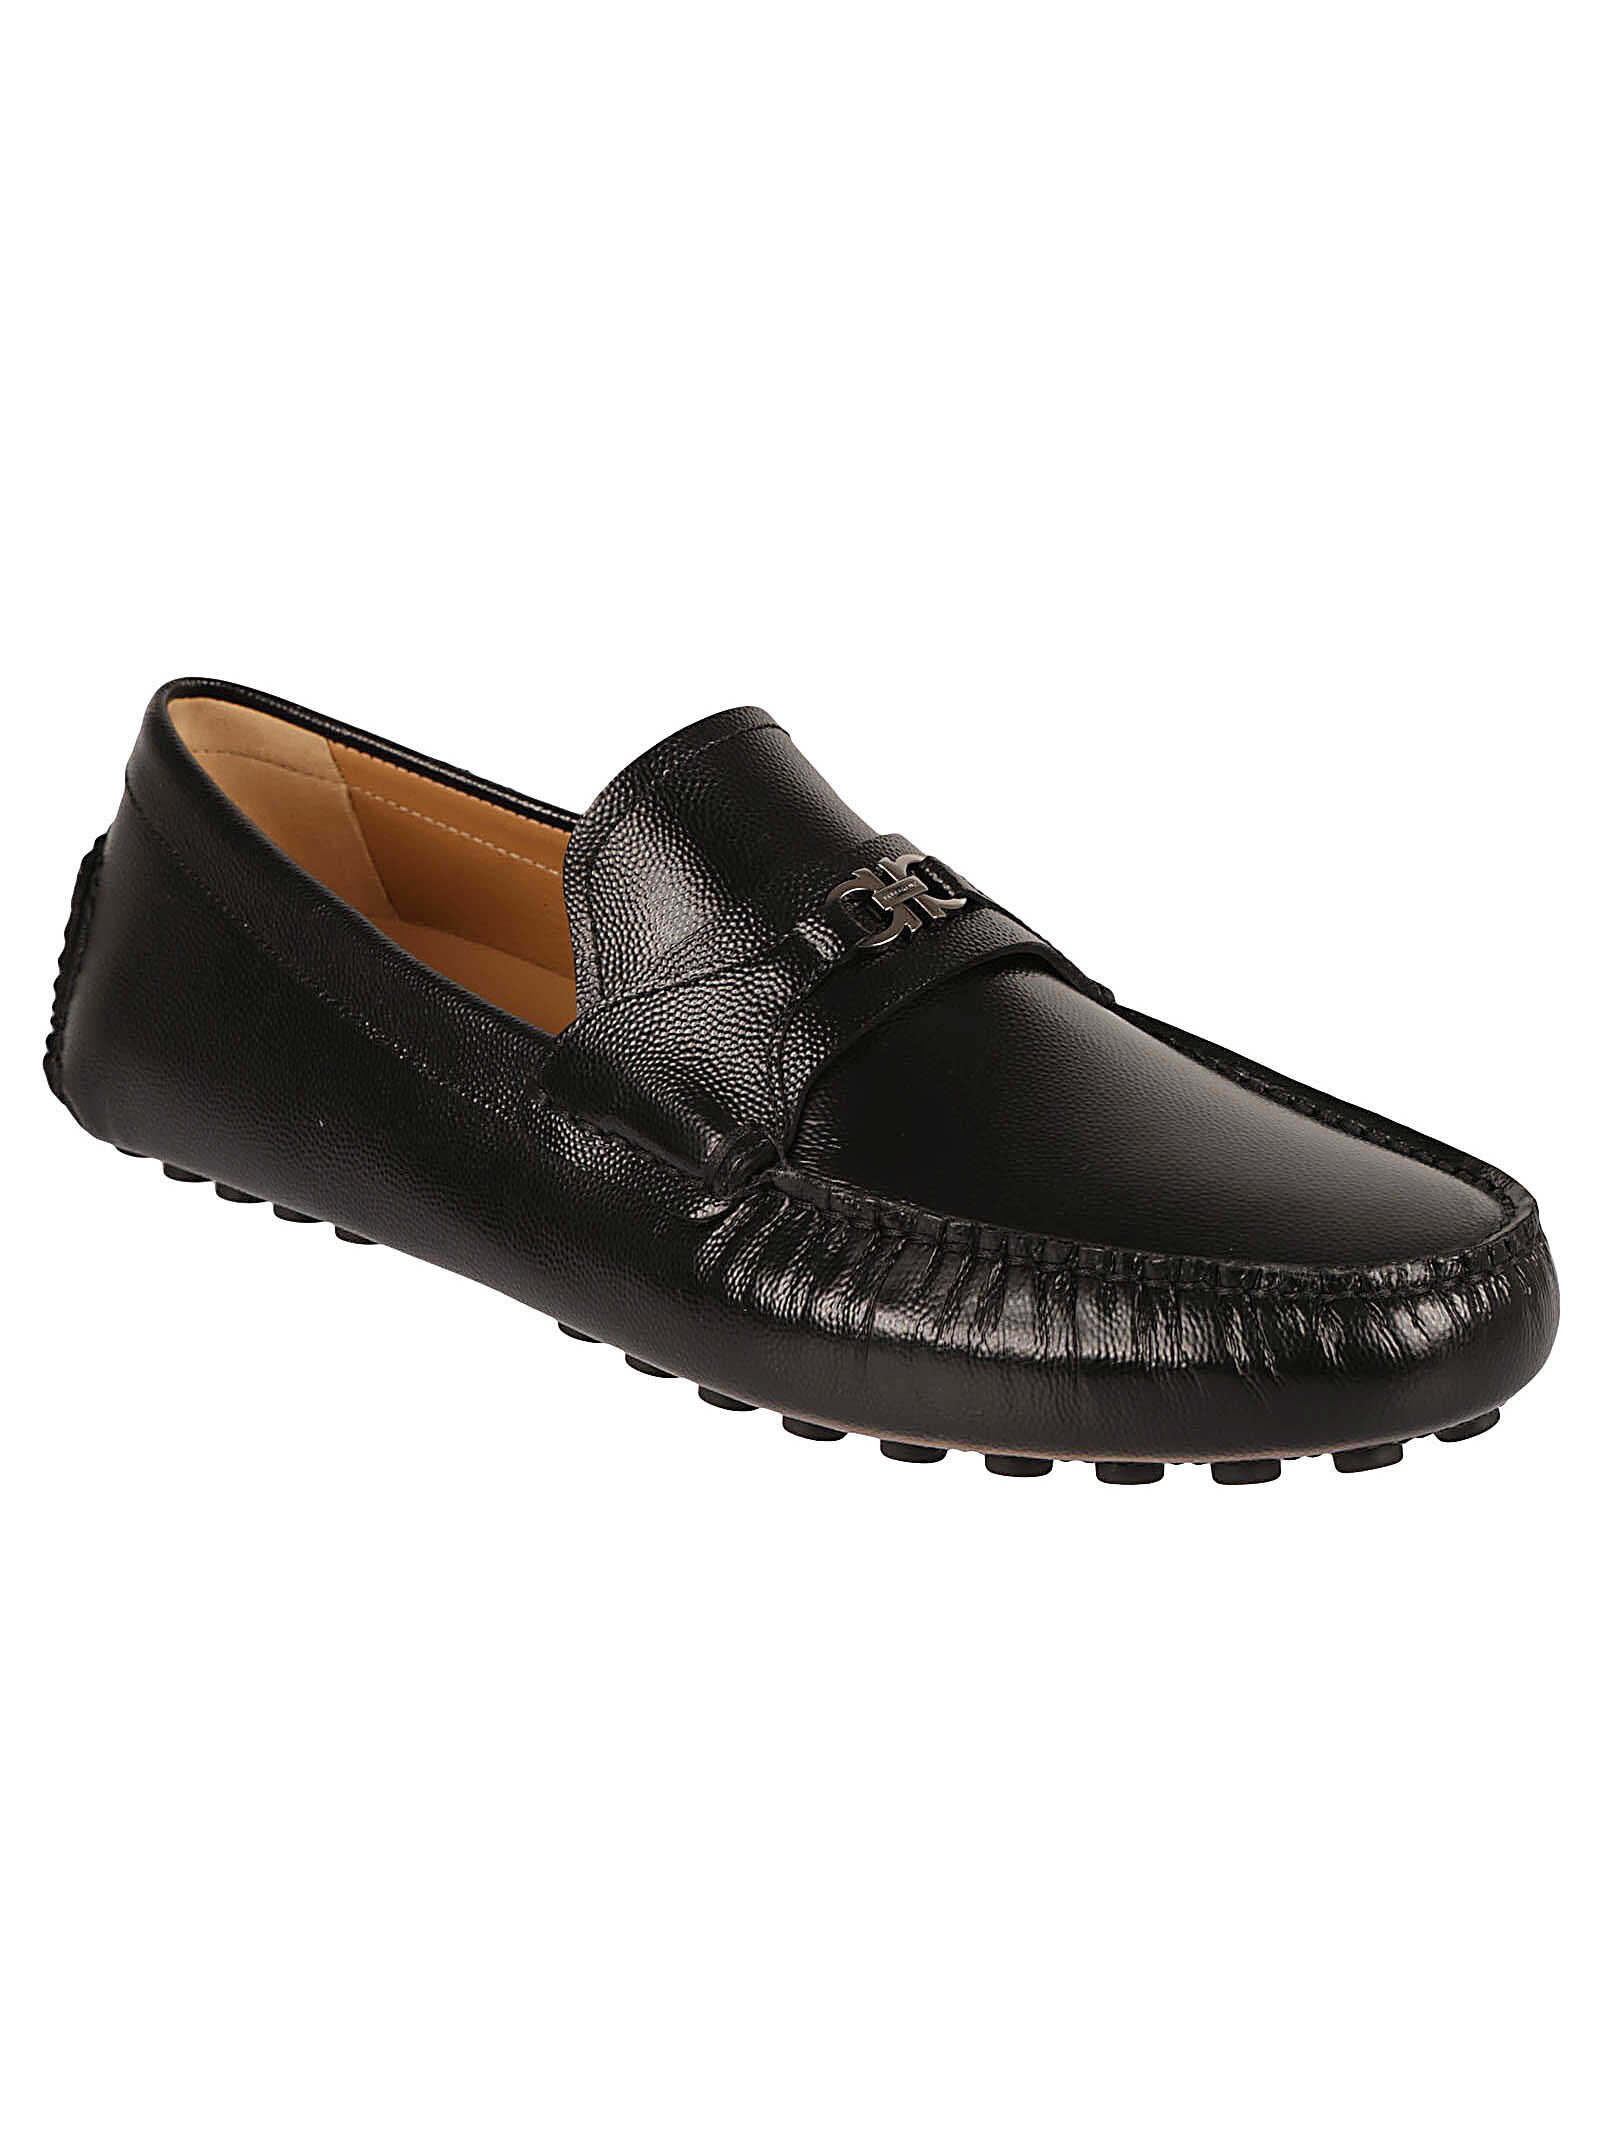 Salvatore Ferragamo Flat Shoes Black